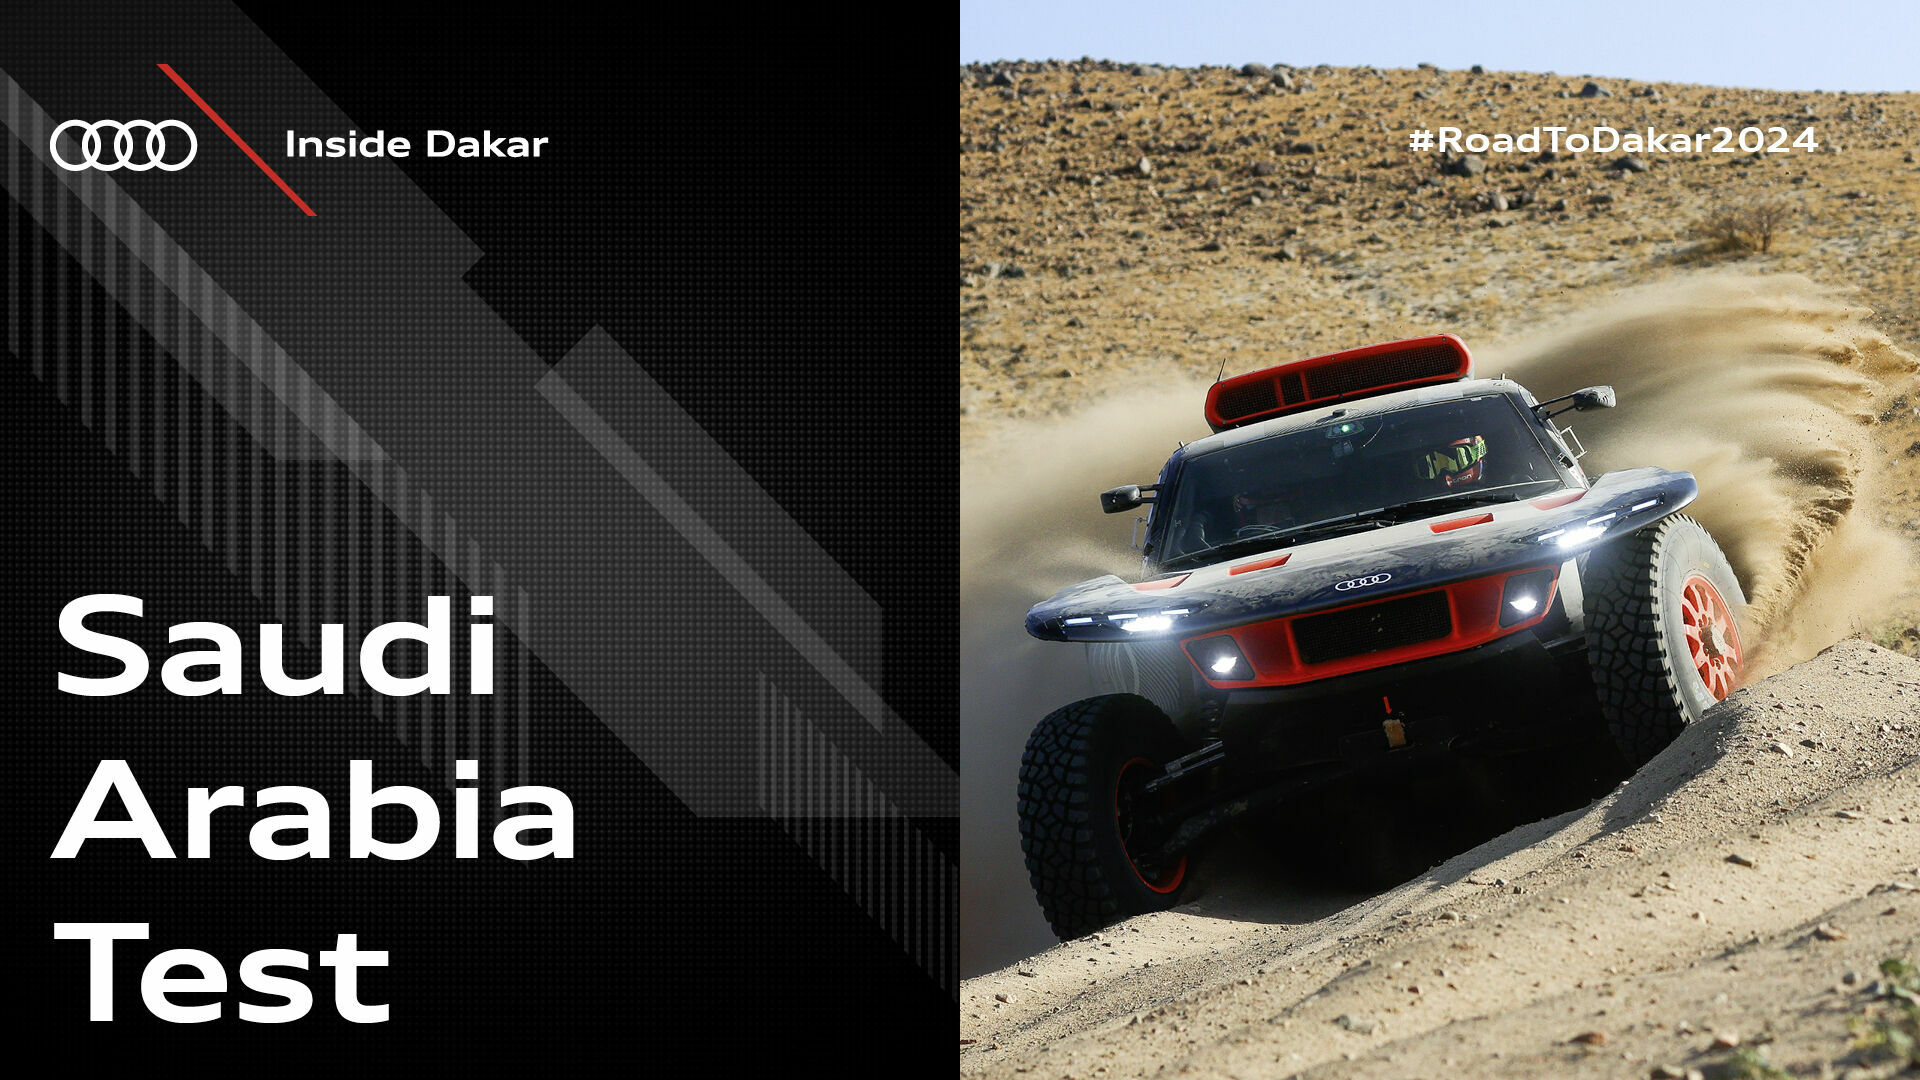 Inside Dakar: Saudi Arabia test